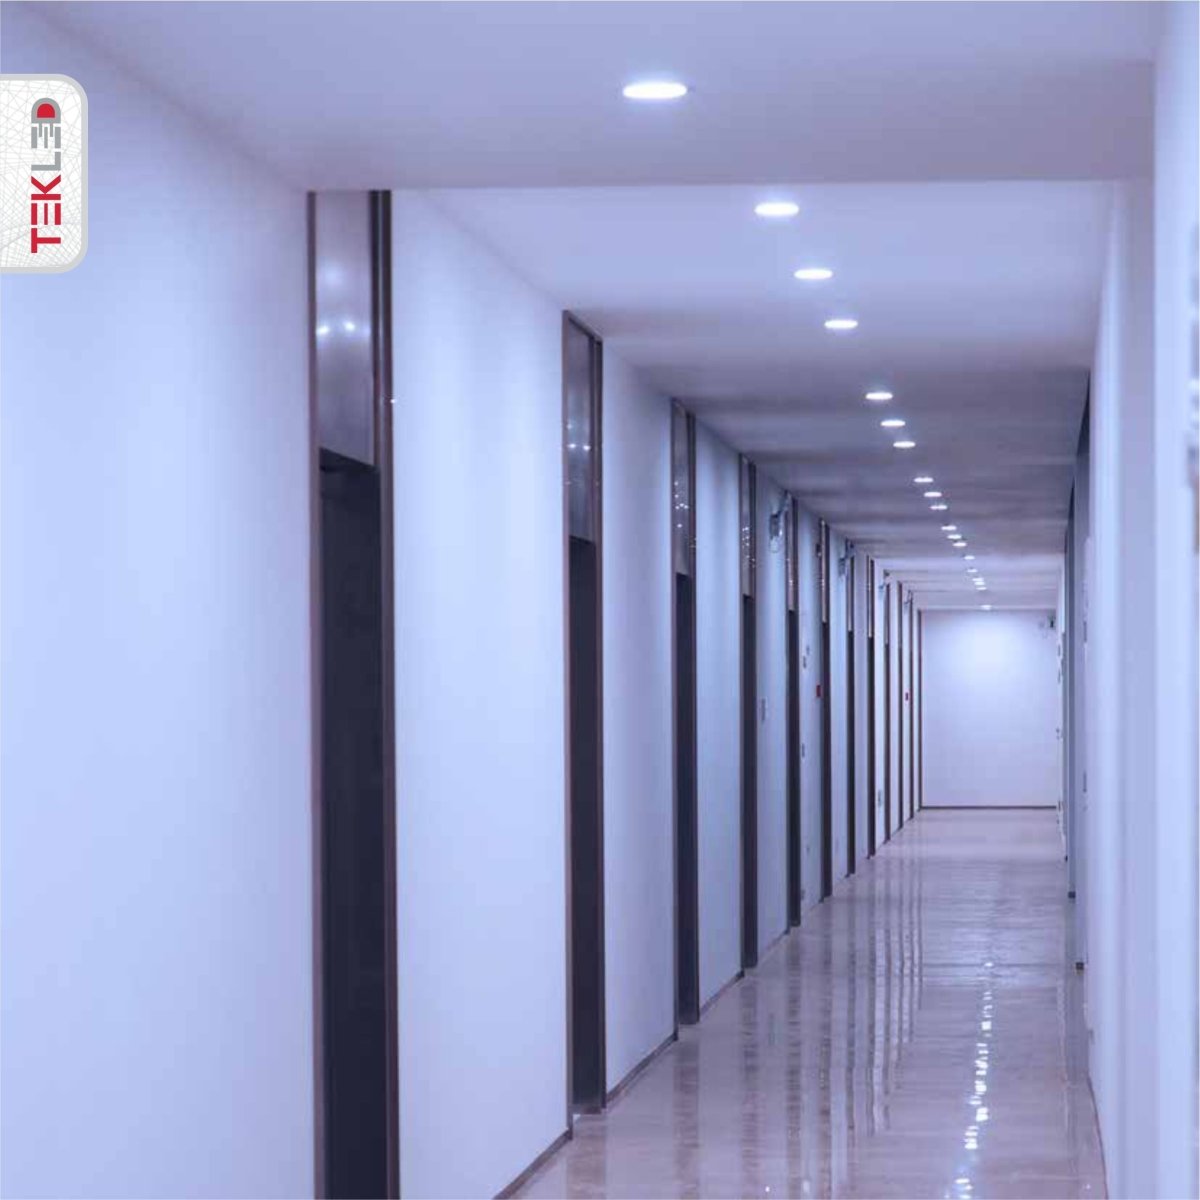 Downlight Led Round Slim Panel Light 24W 3000K Warm White D300Mm in indoor setting hallway